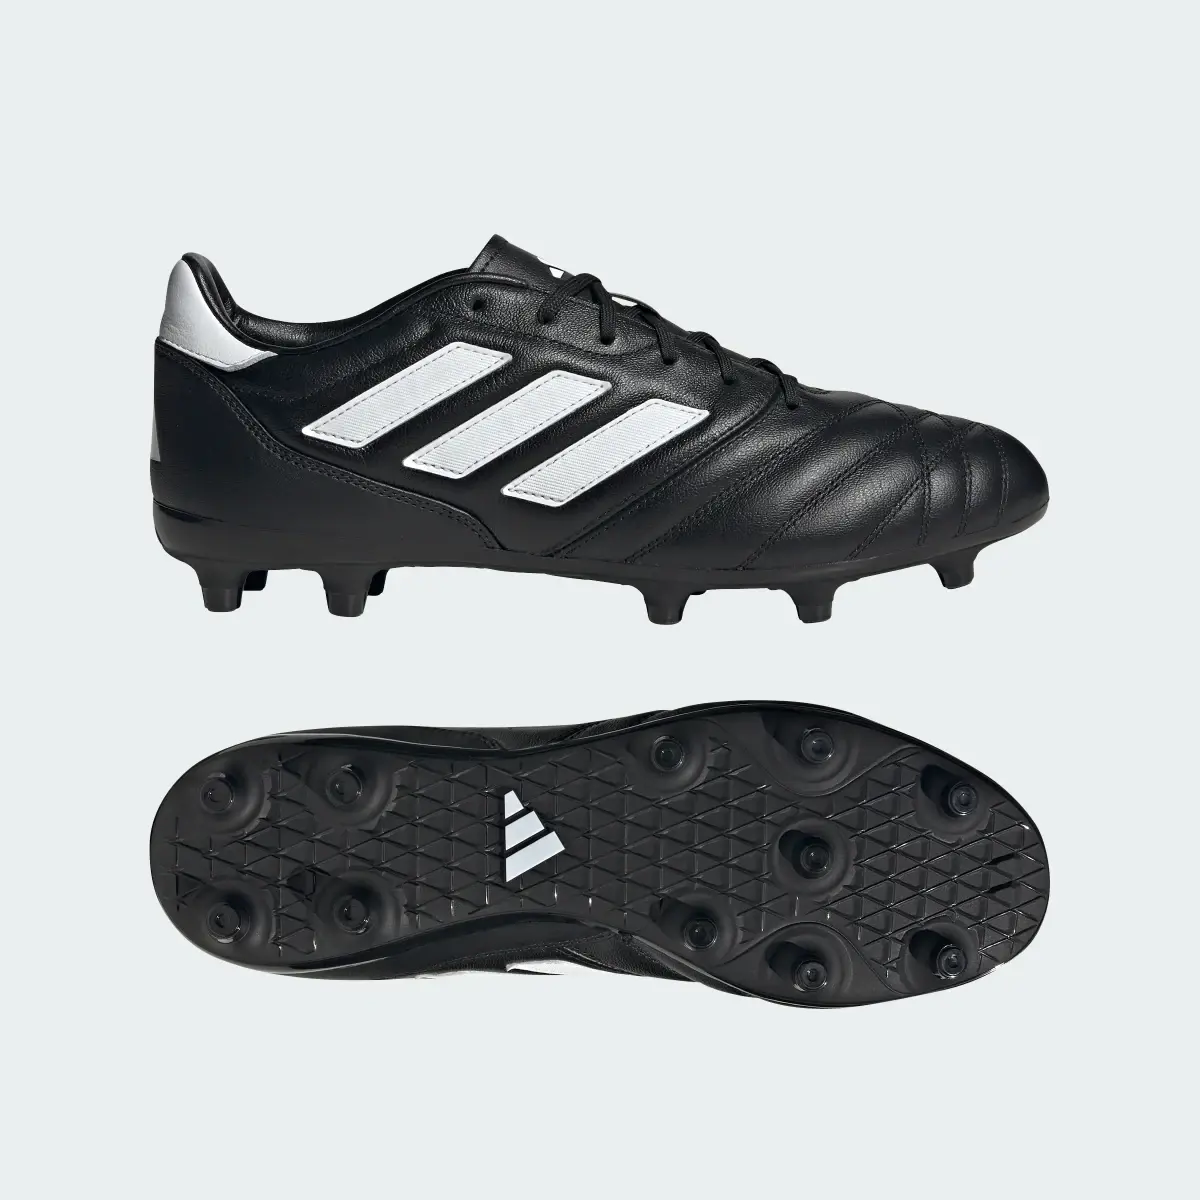 Adidas Copa Gloro Firm Ground Boots. 1